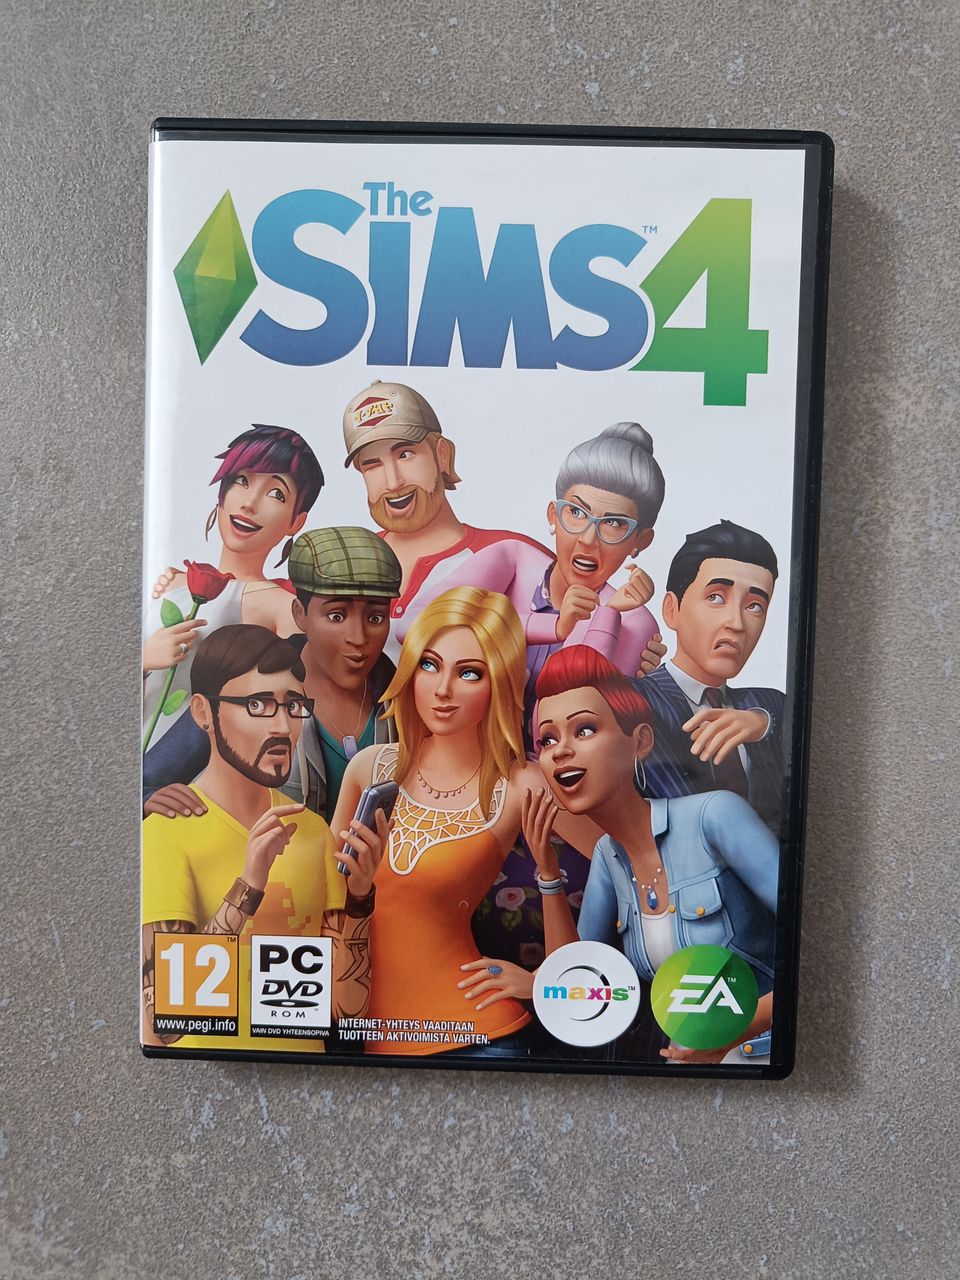 Sims 4 PC